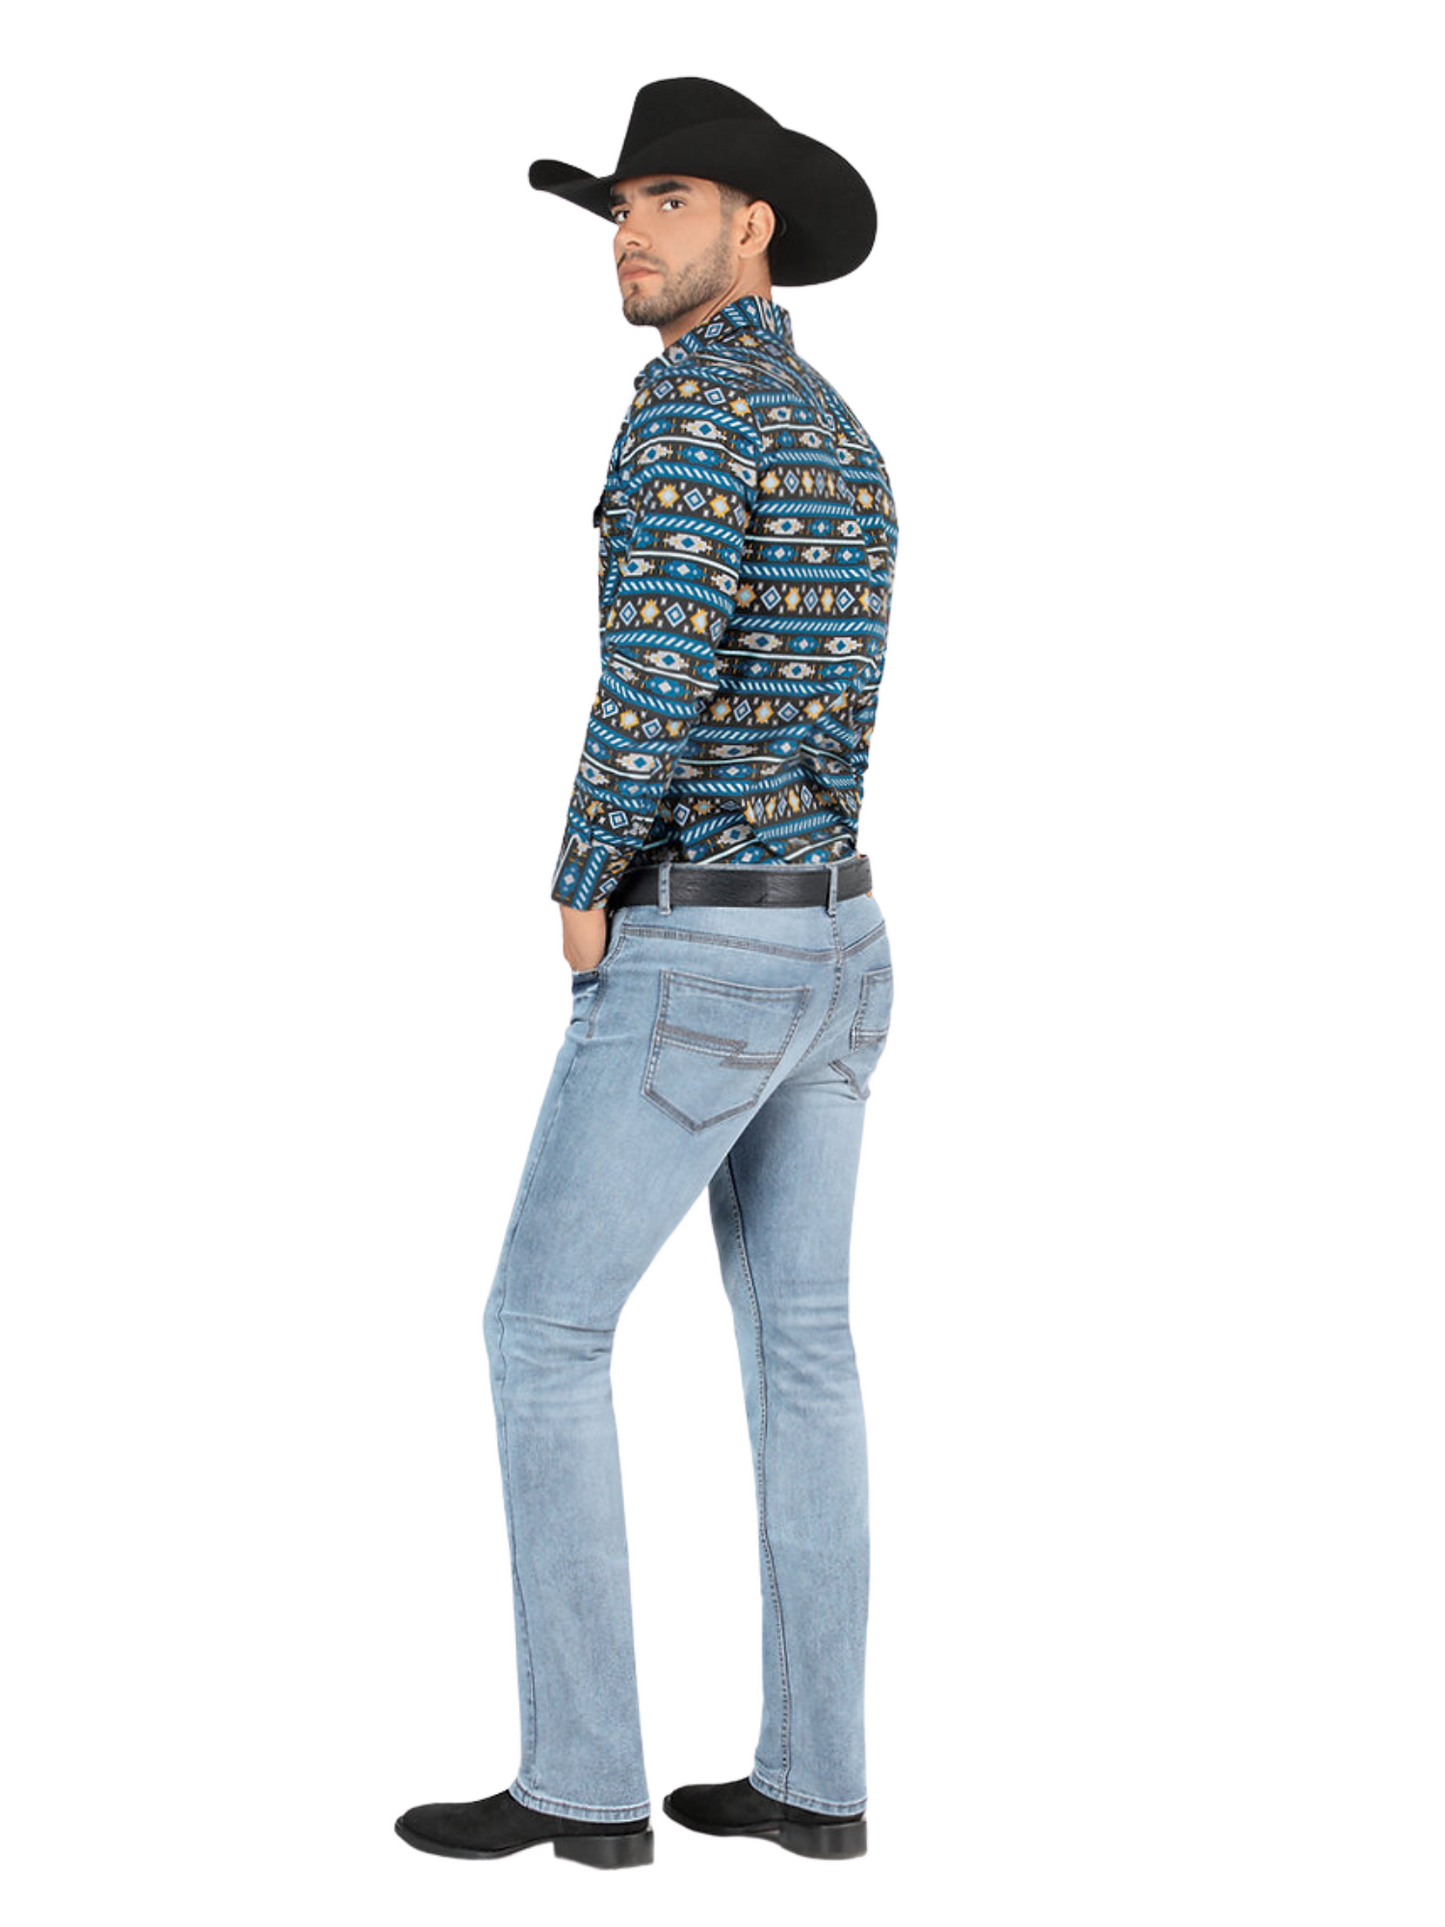 Stretch Denim Jeans for Men 'Montero' - ID: 5308 Denim Jeans Montero